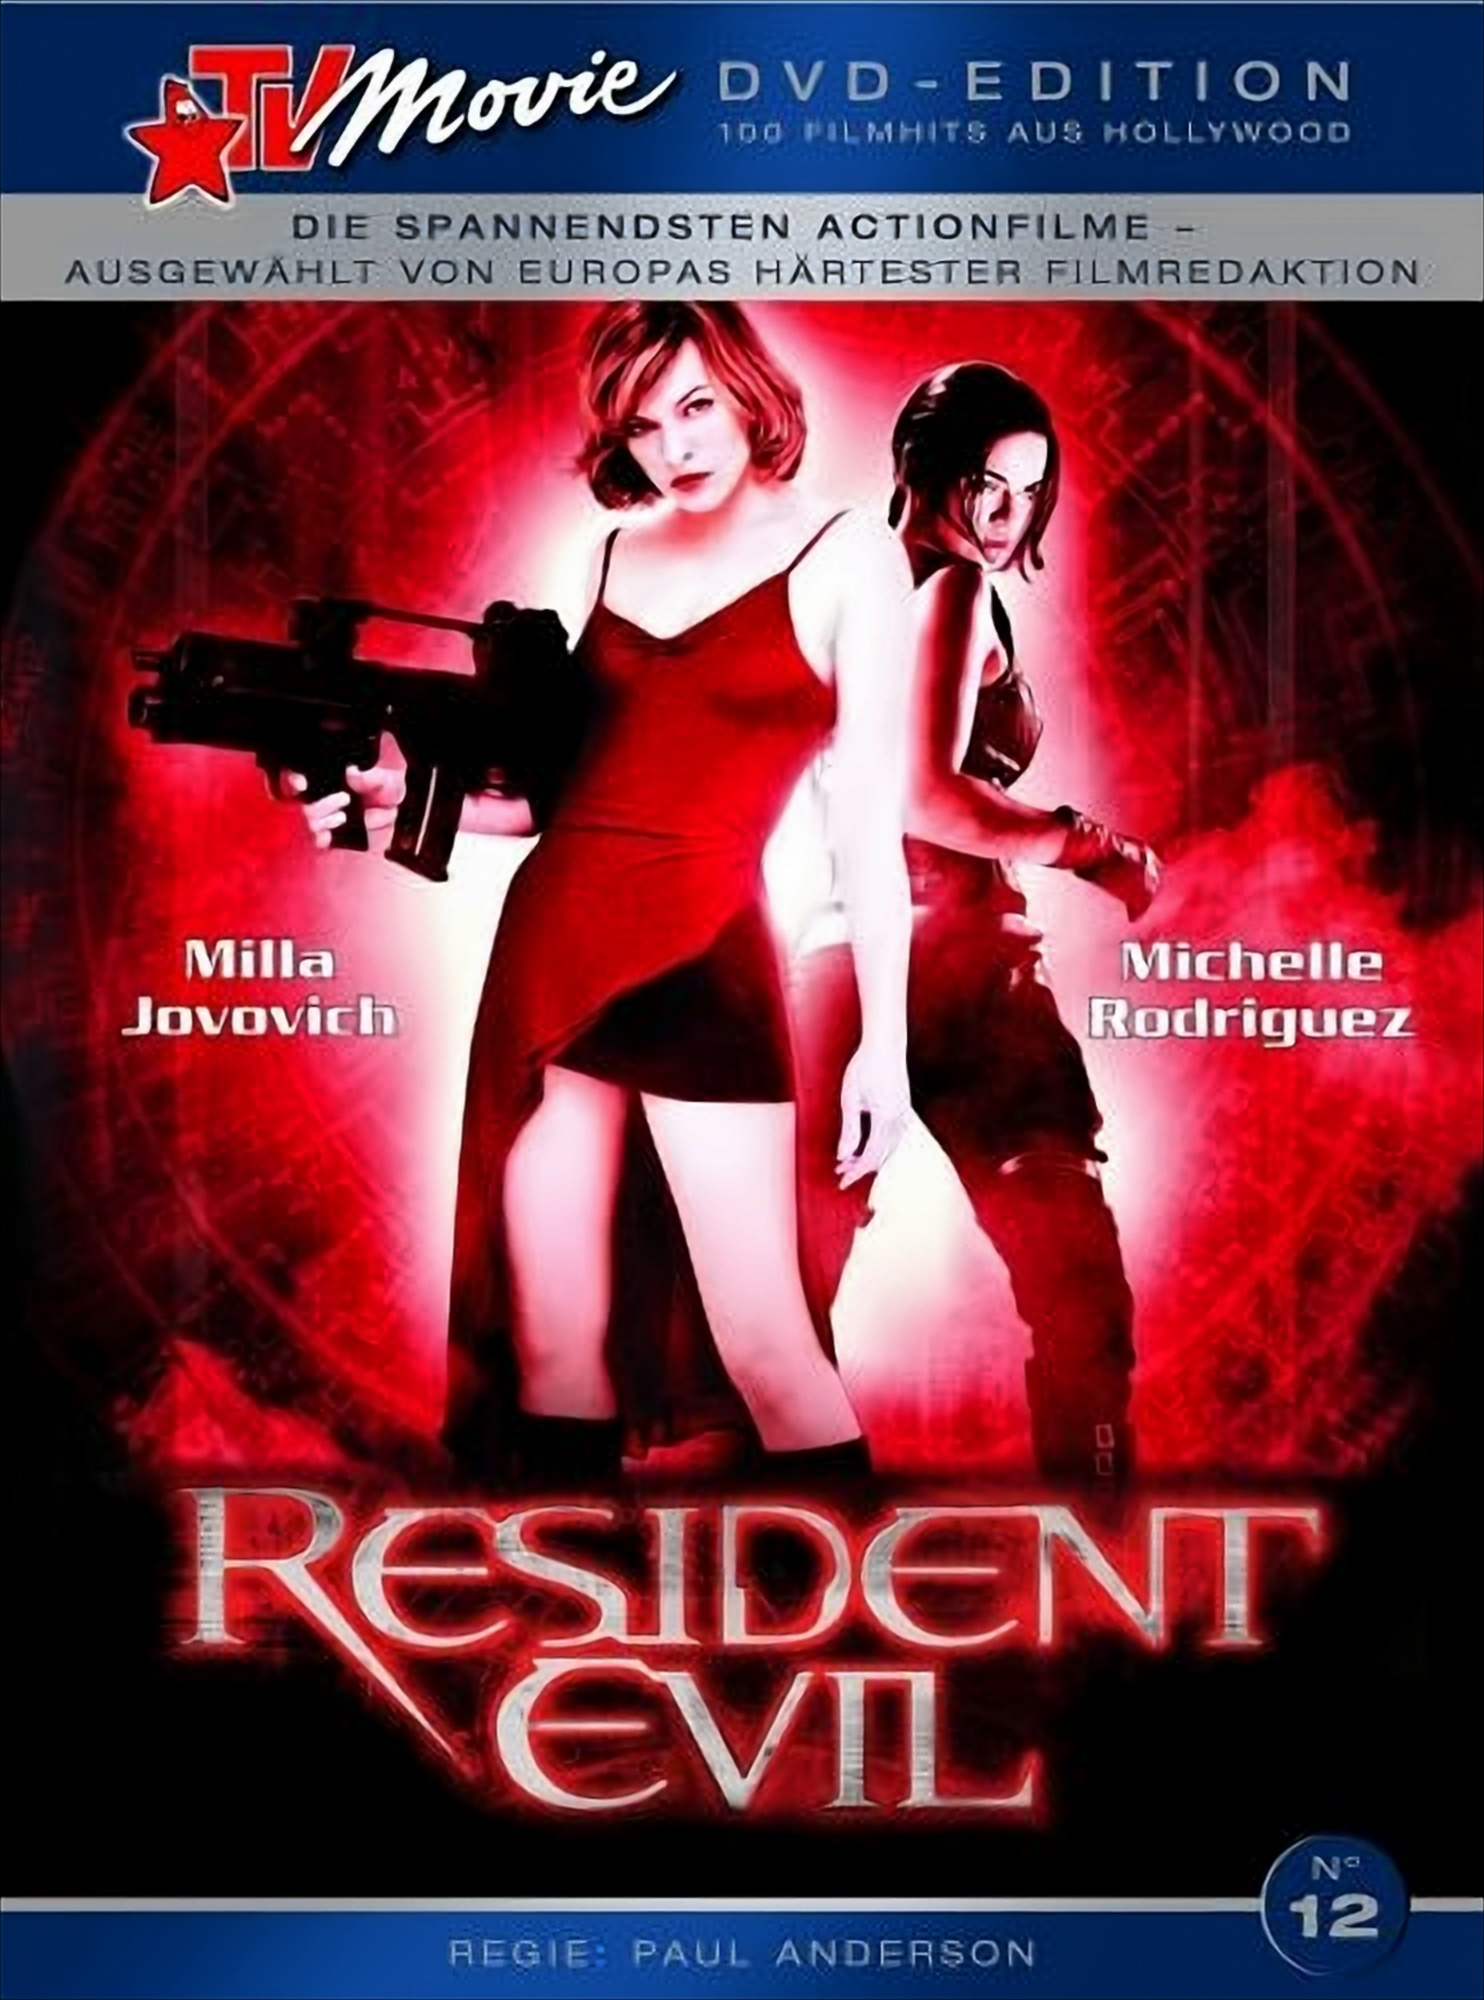 Evil DVD - TV Resident Edition Movie